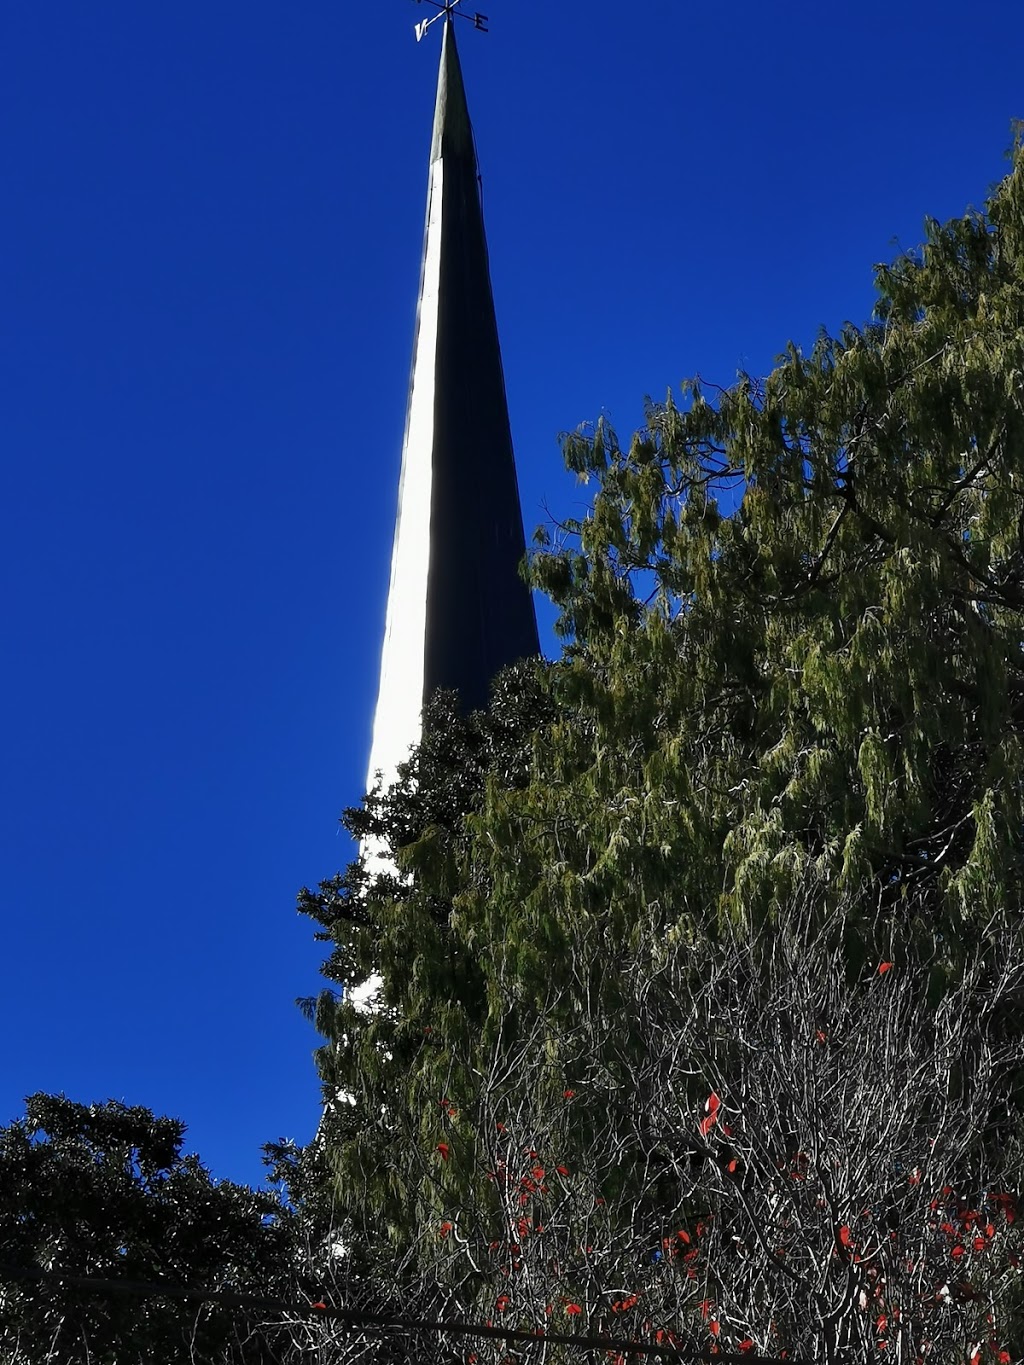 St Pauls Anglican Church | church | Collins St, Carcoar NSW 2791, Australia